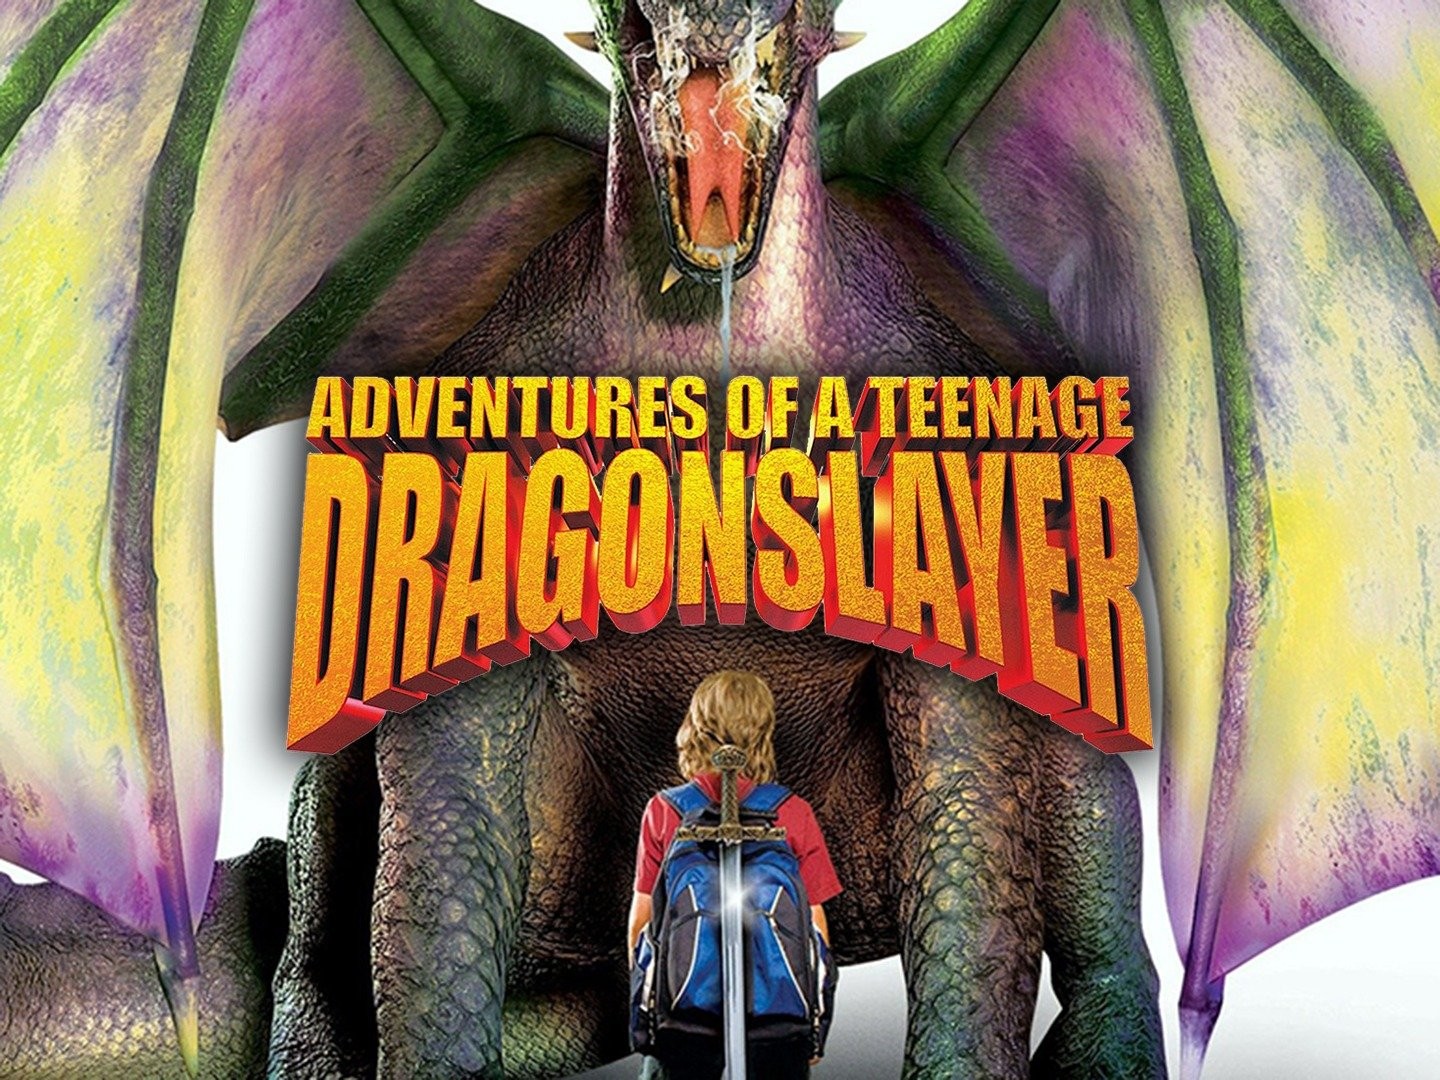 Adventures of a Teenage Dragon Slayer - Wikipedia